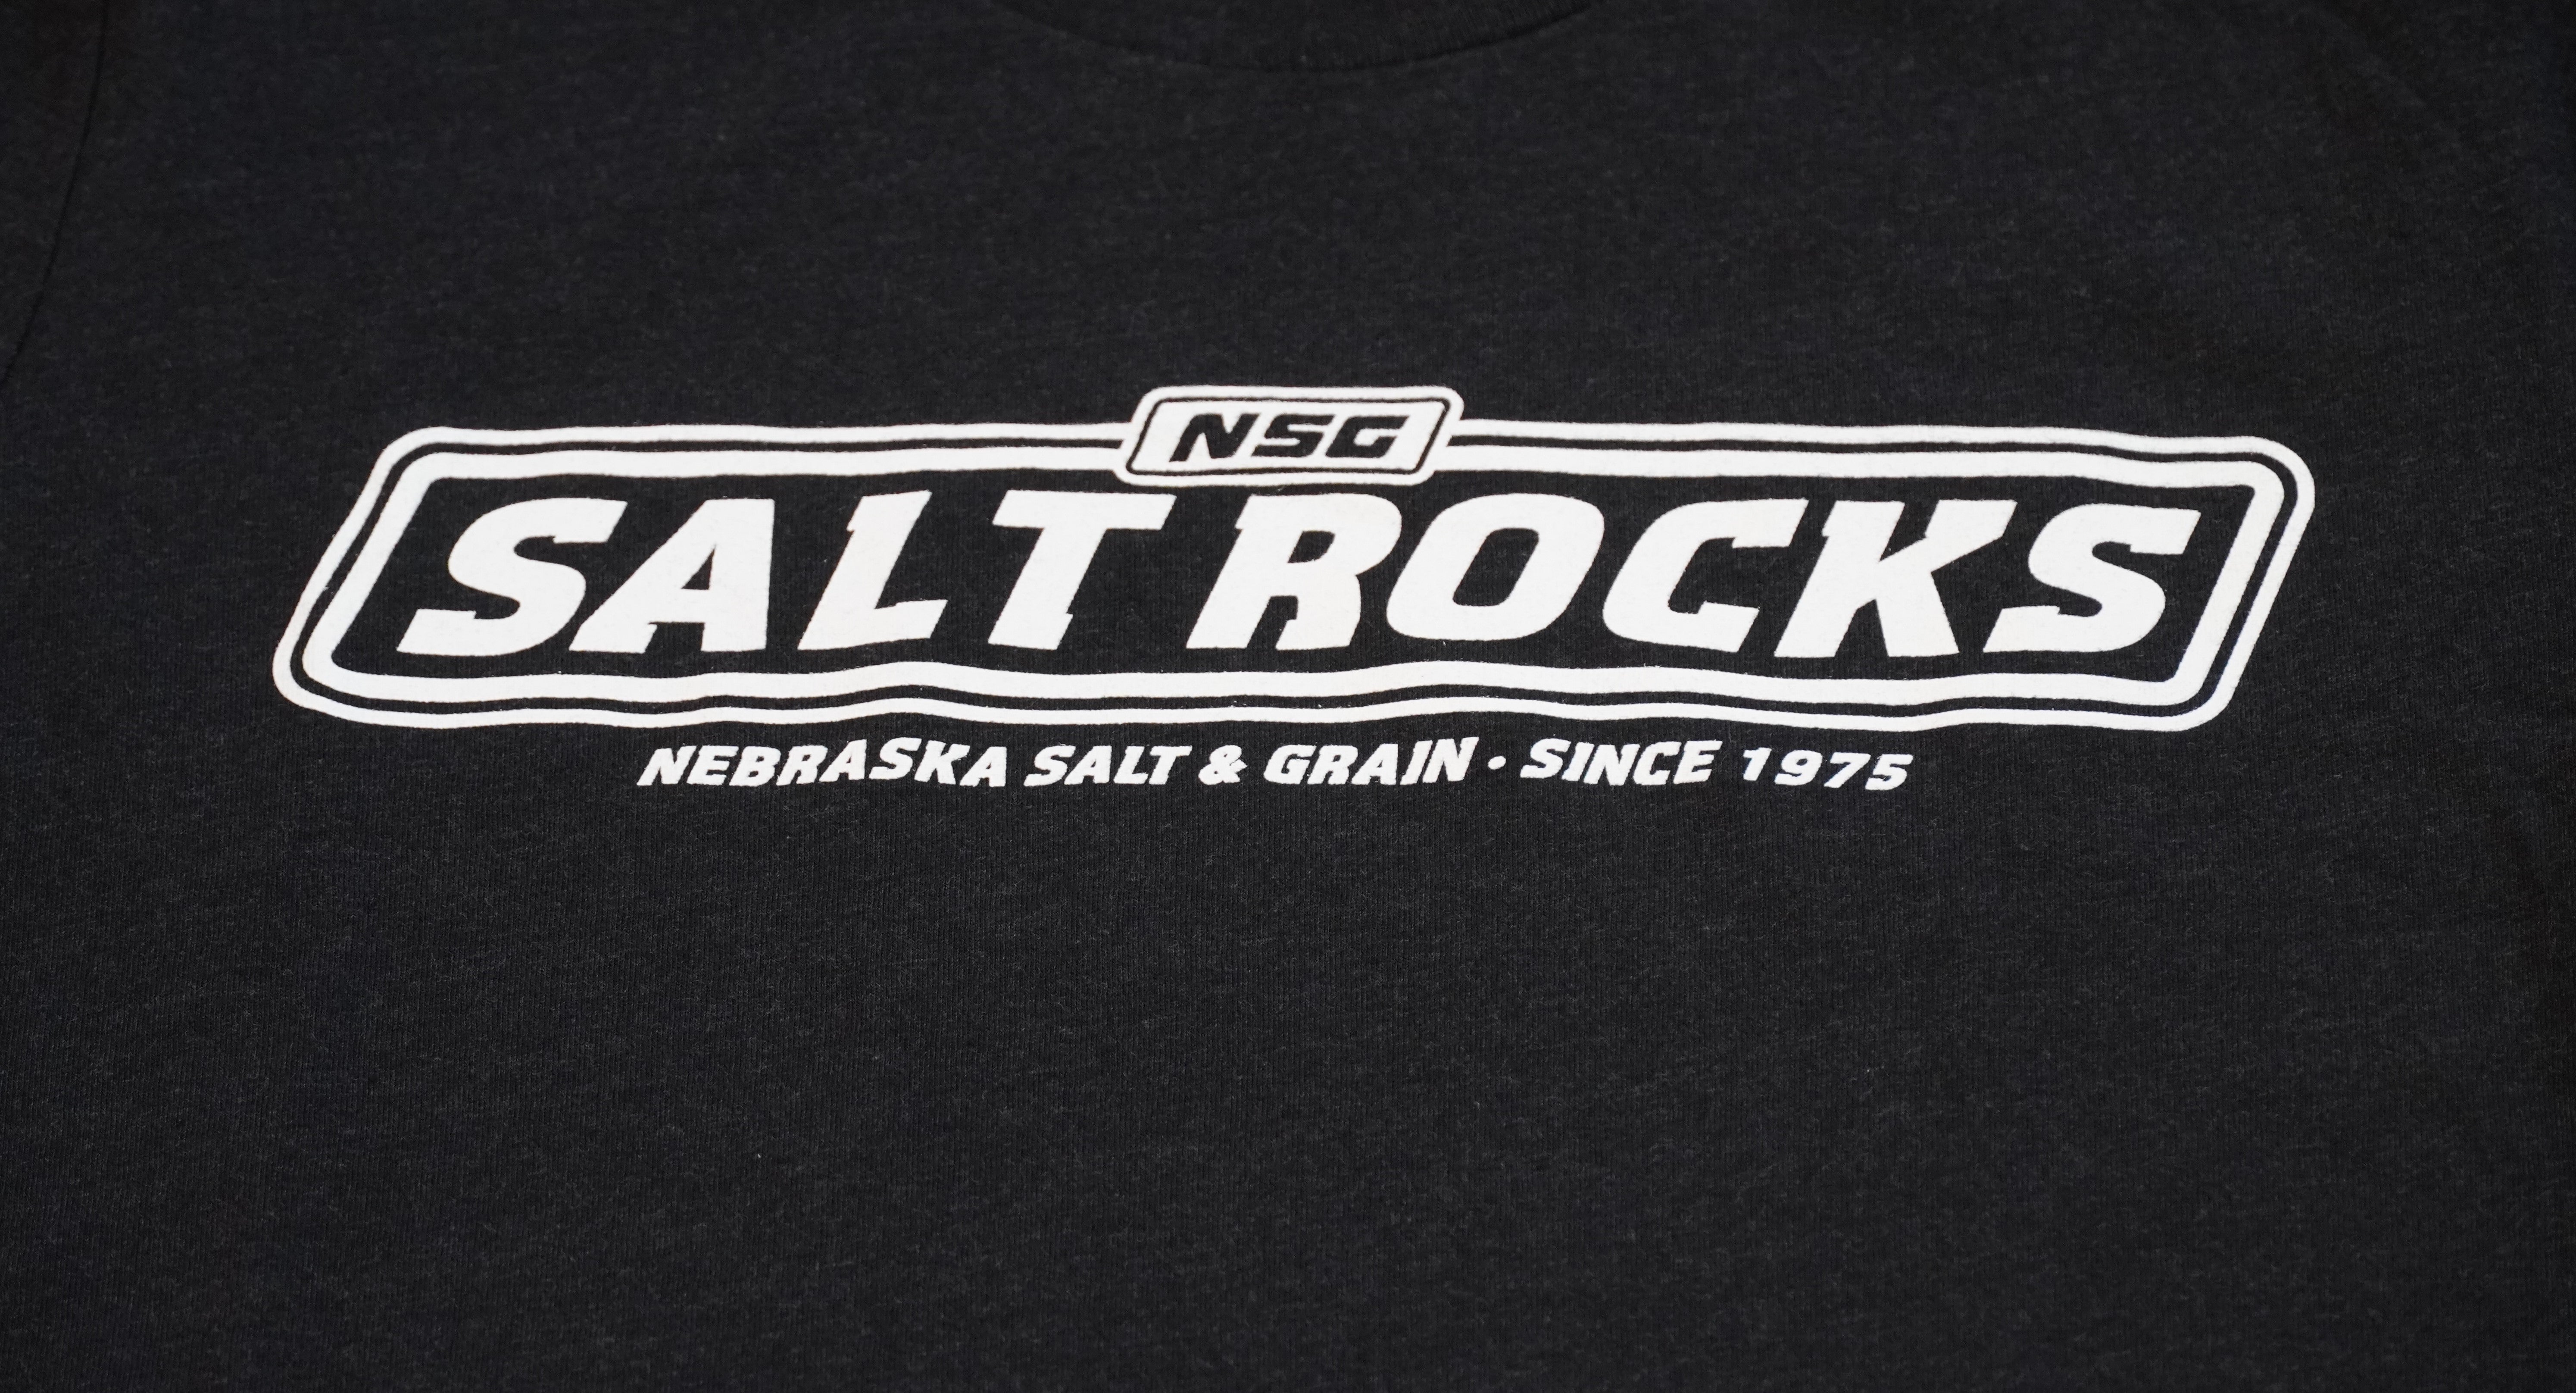 Salt Rocks T-Shirt